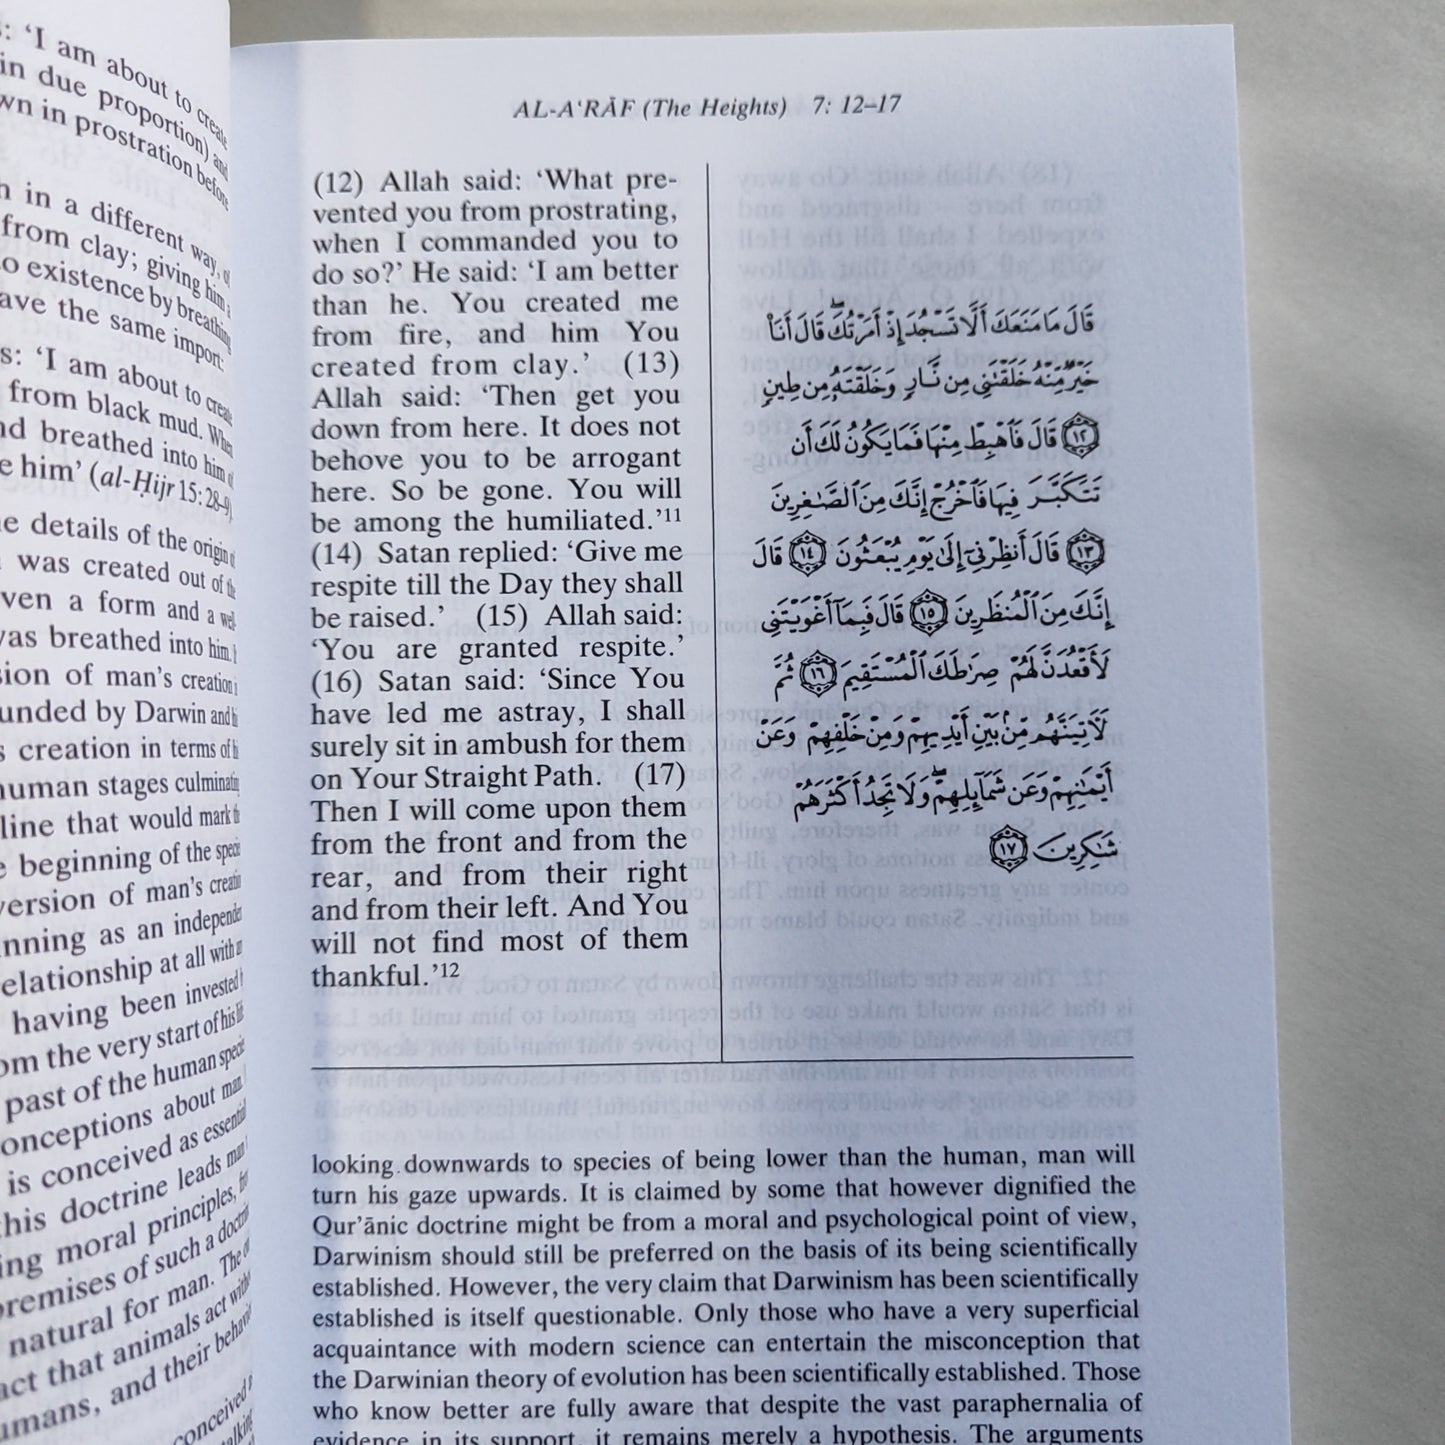 Towards Understanding The Quran (Tafhim Al- Quran) Volume 3